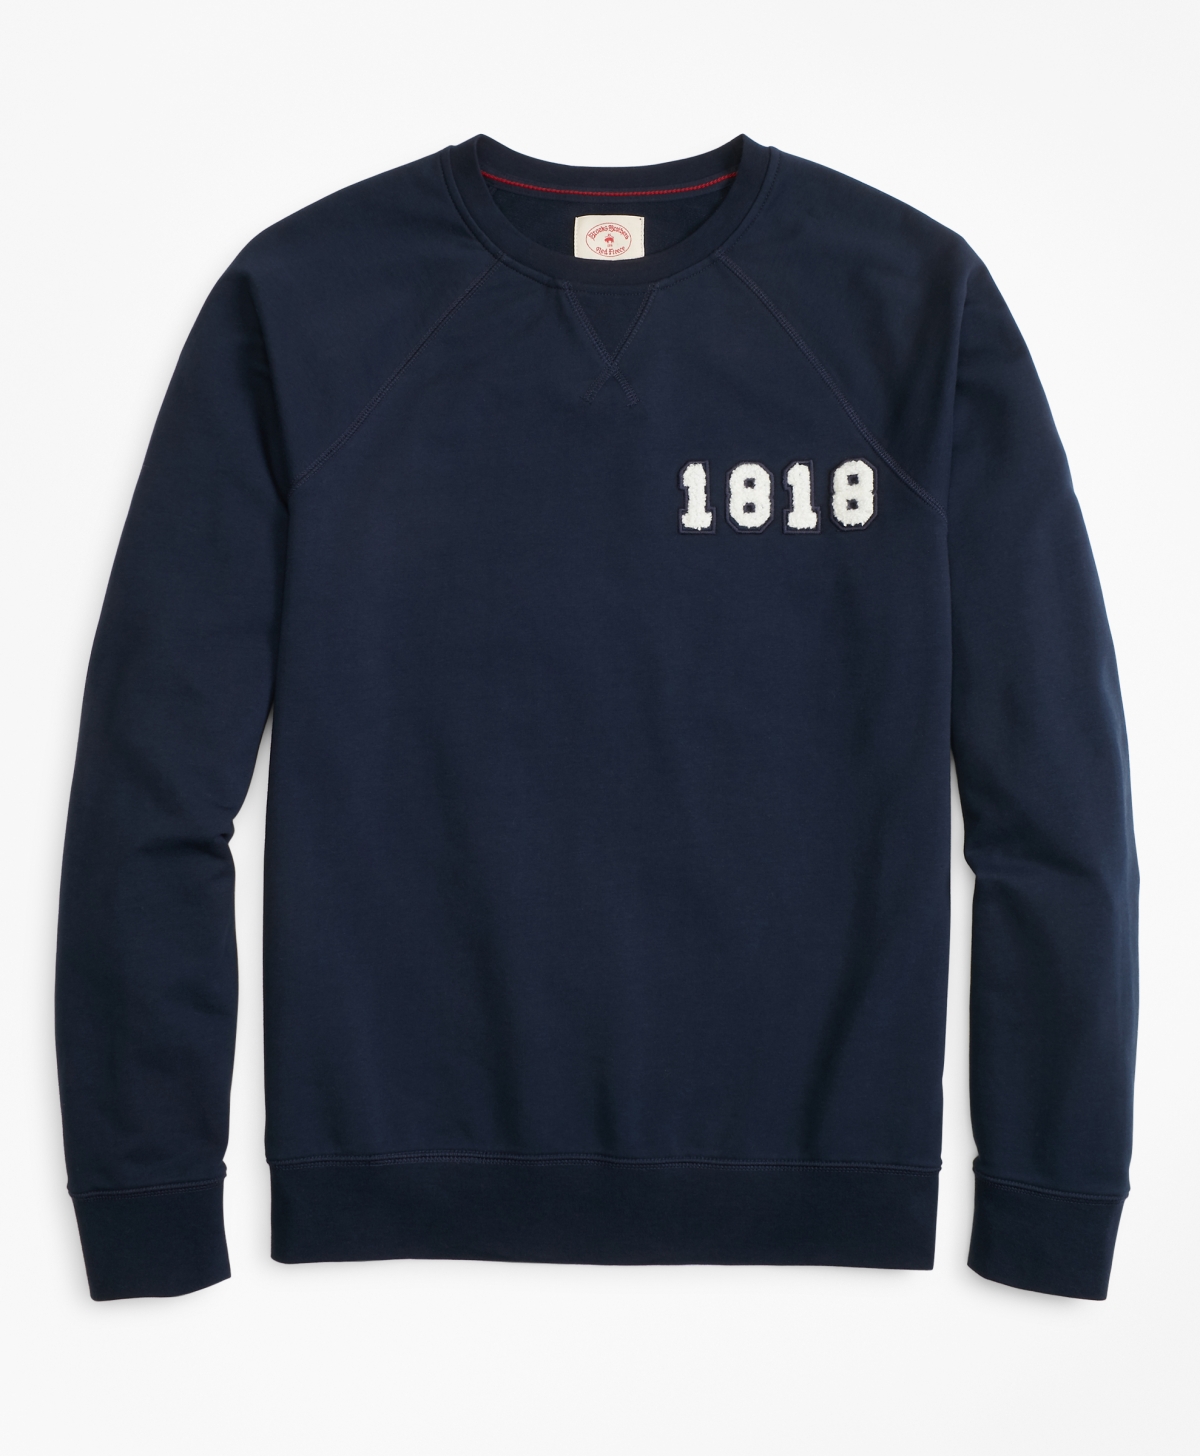 French Terry 1818 Crewneck Sweatshirt